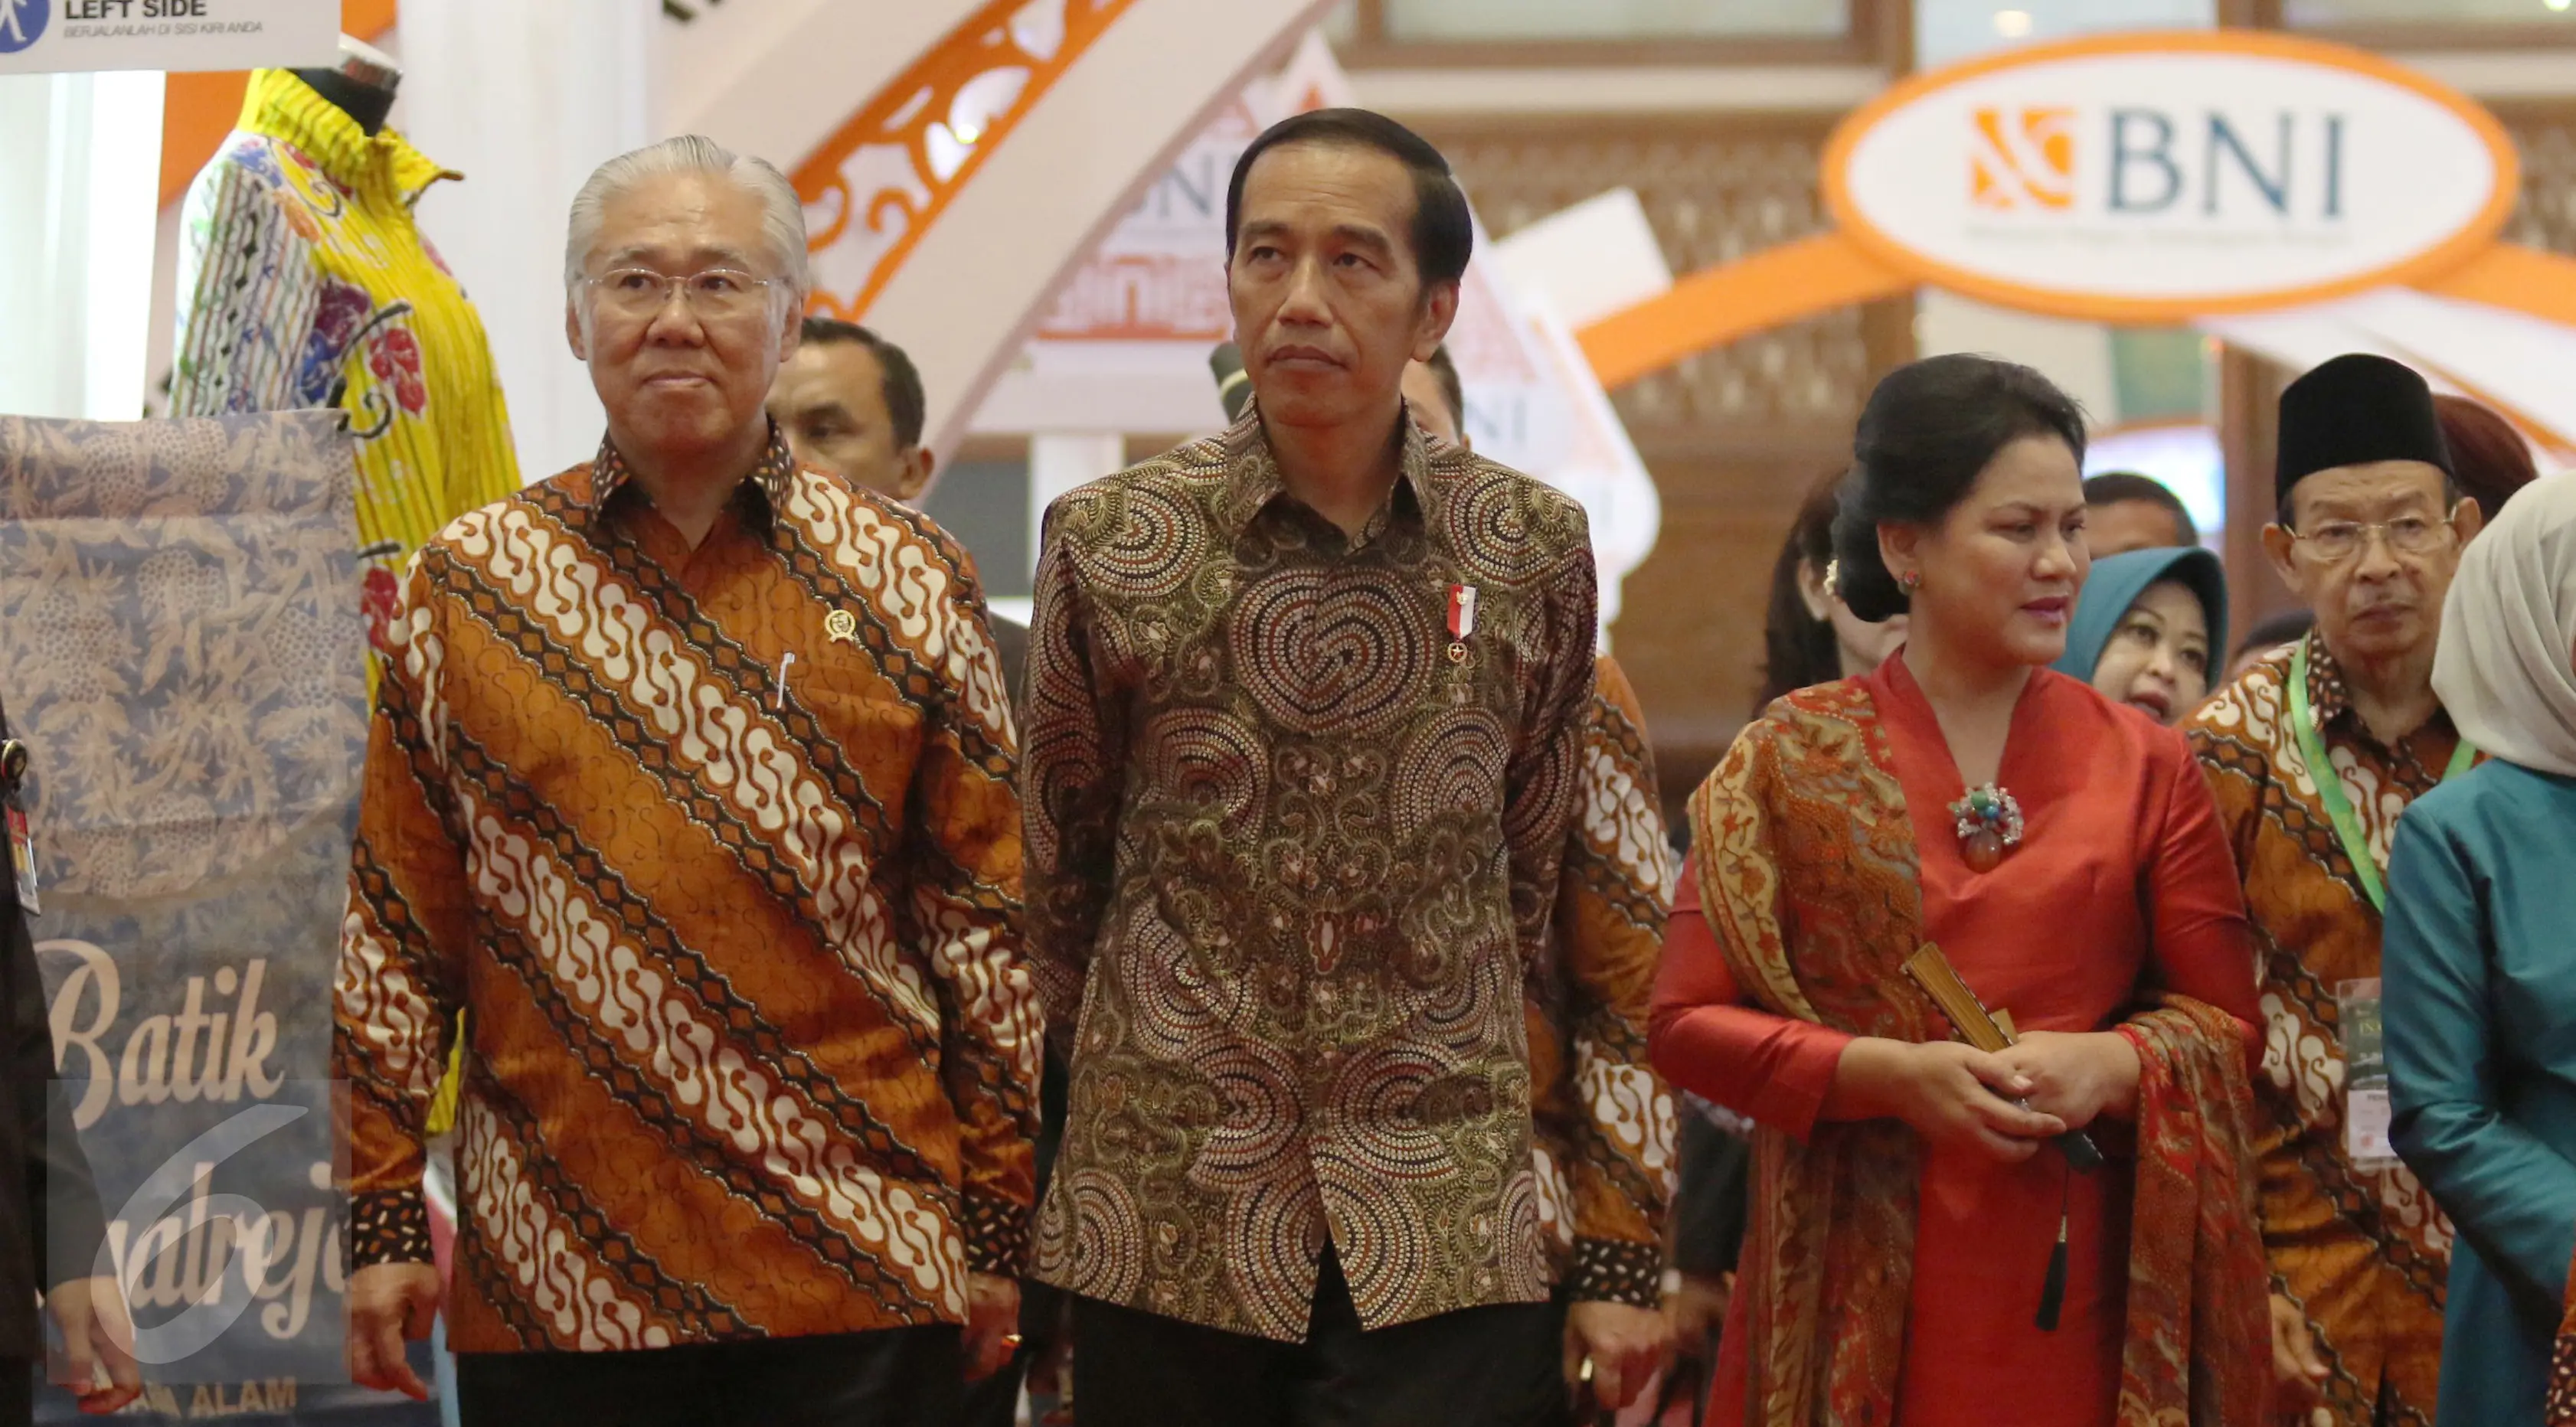 Presiden Jokowi didampingi ibu negara Iriana dan Menteri Perdagangan Enggartiasto Lukita saat melihat pameran Inacraft 2017 di JCC, Senayan, Jakarta, Rabu (26/4). Pameran Inacraft merupakan acara yang digelar setiap tahun. (Liputan6.com/Angga Yuniar)